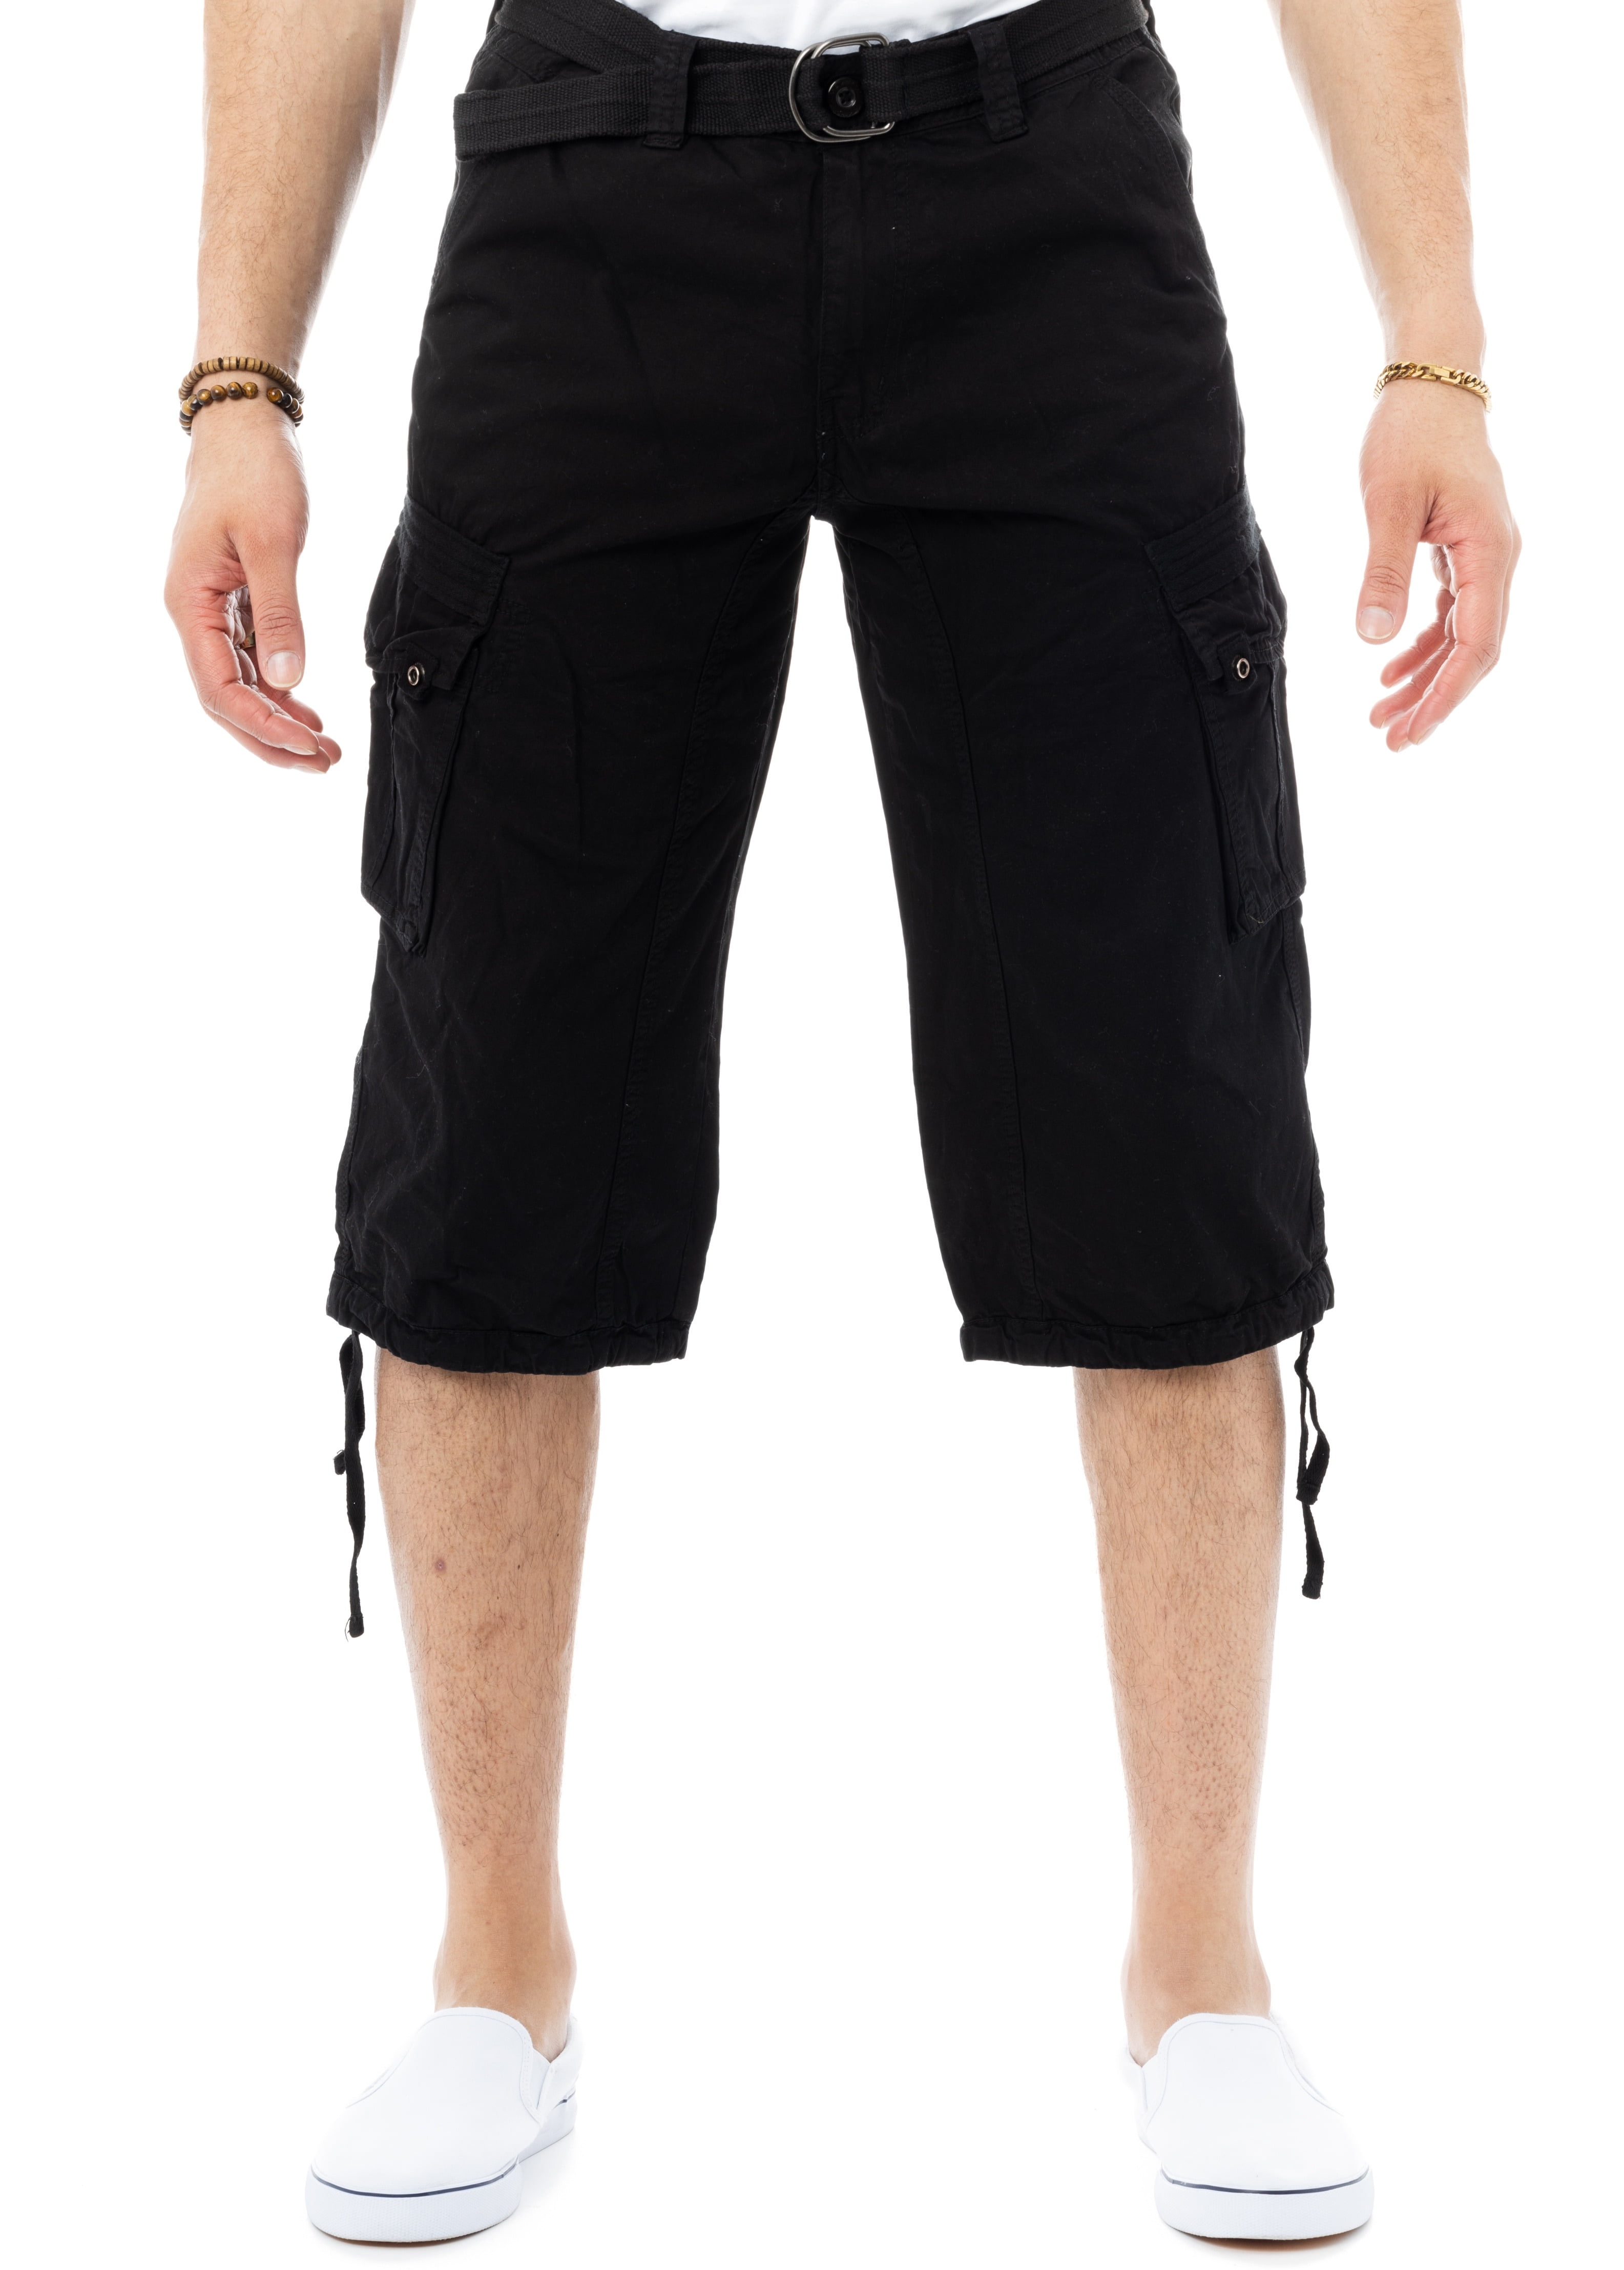 AOYOG Men's Cargo Shorts 3/4 Relaxed Fit Below Knee Capri Cargo Pants  Cotton Dark Army Green | Amazon.com